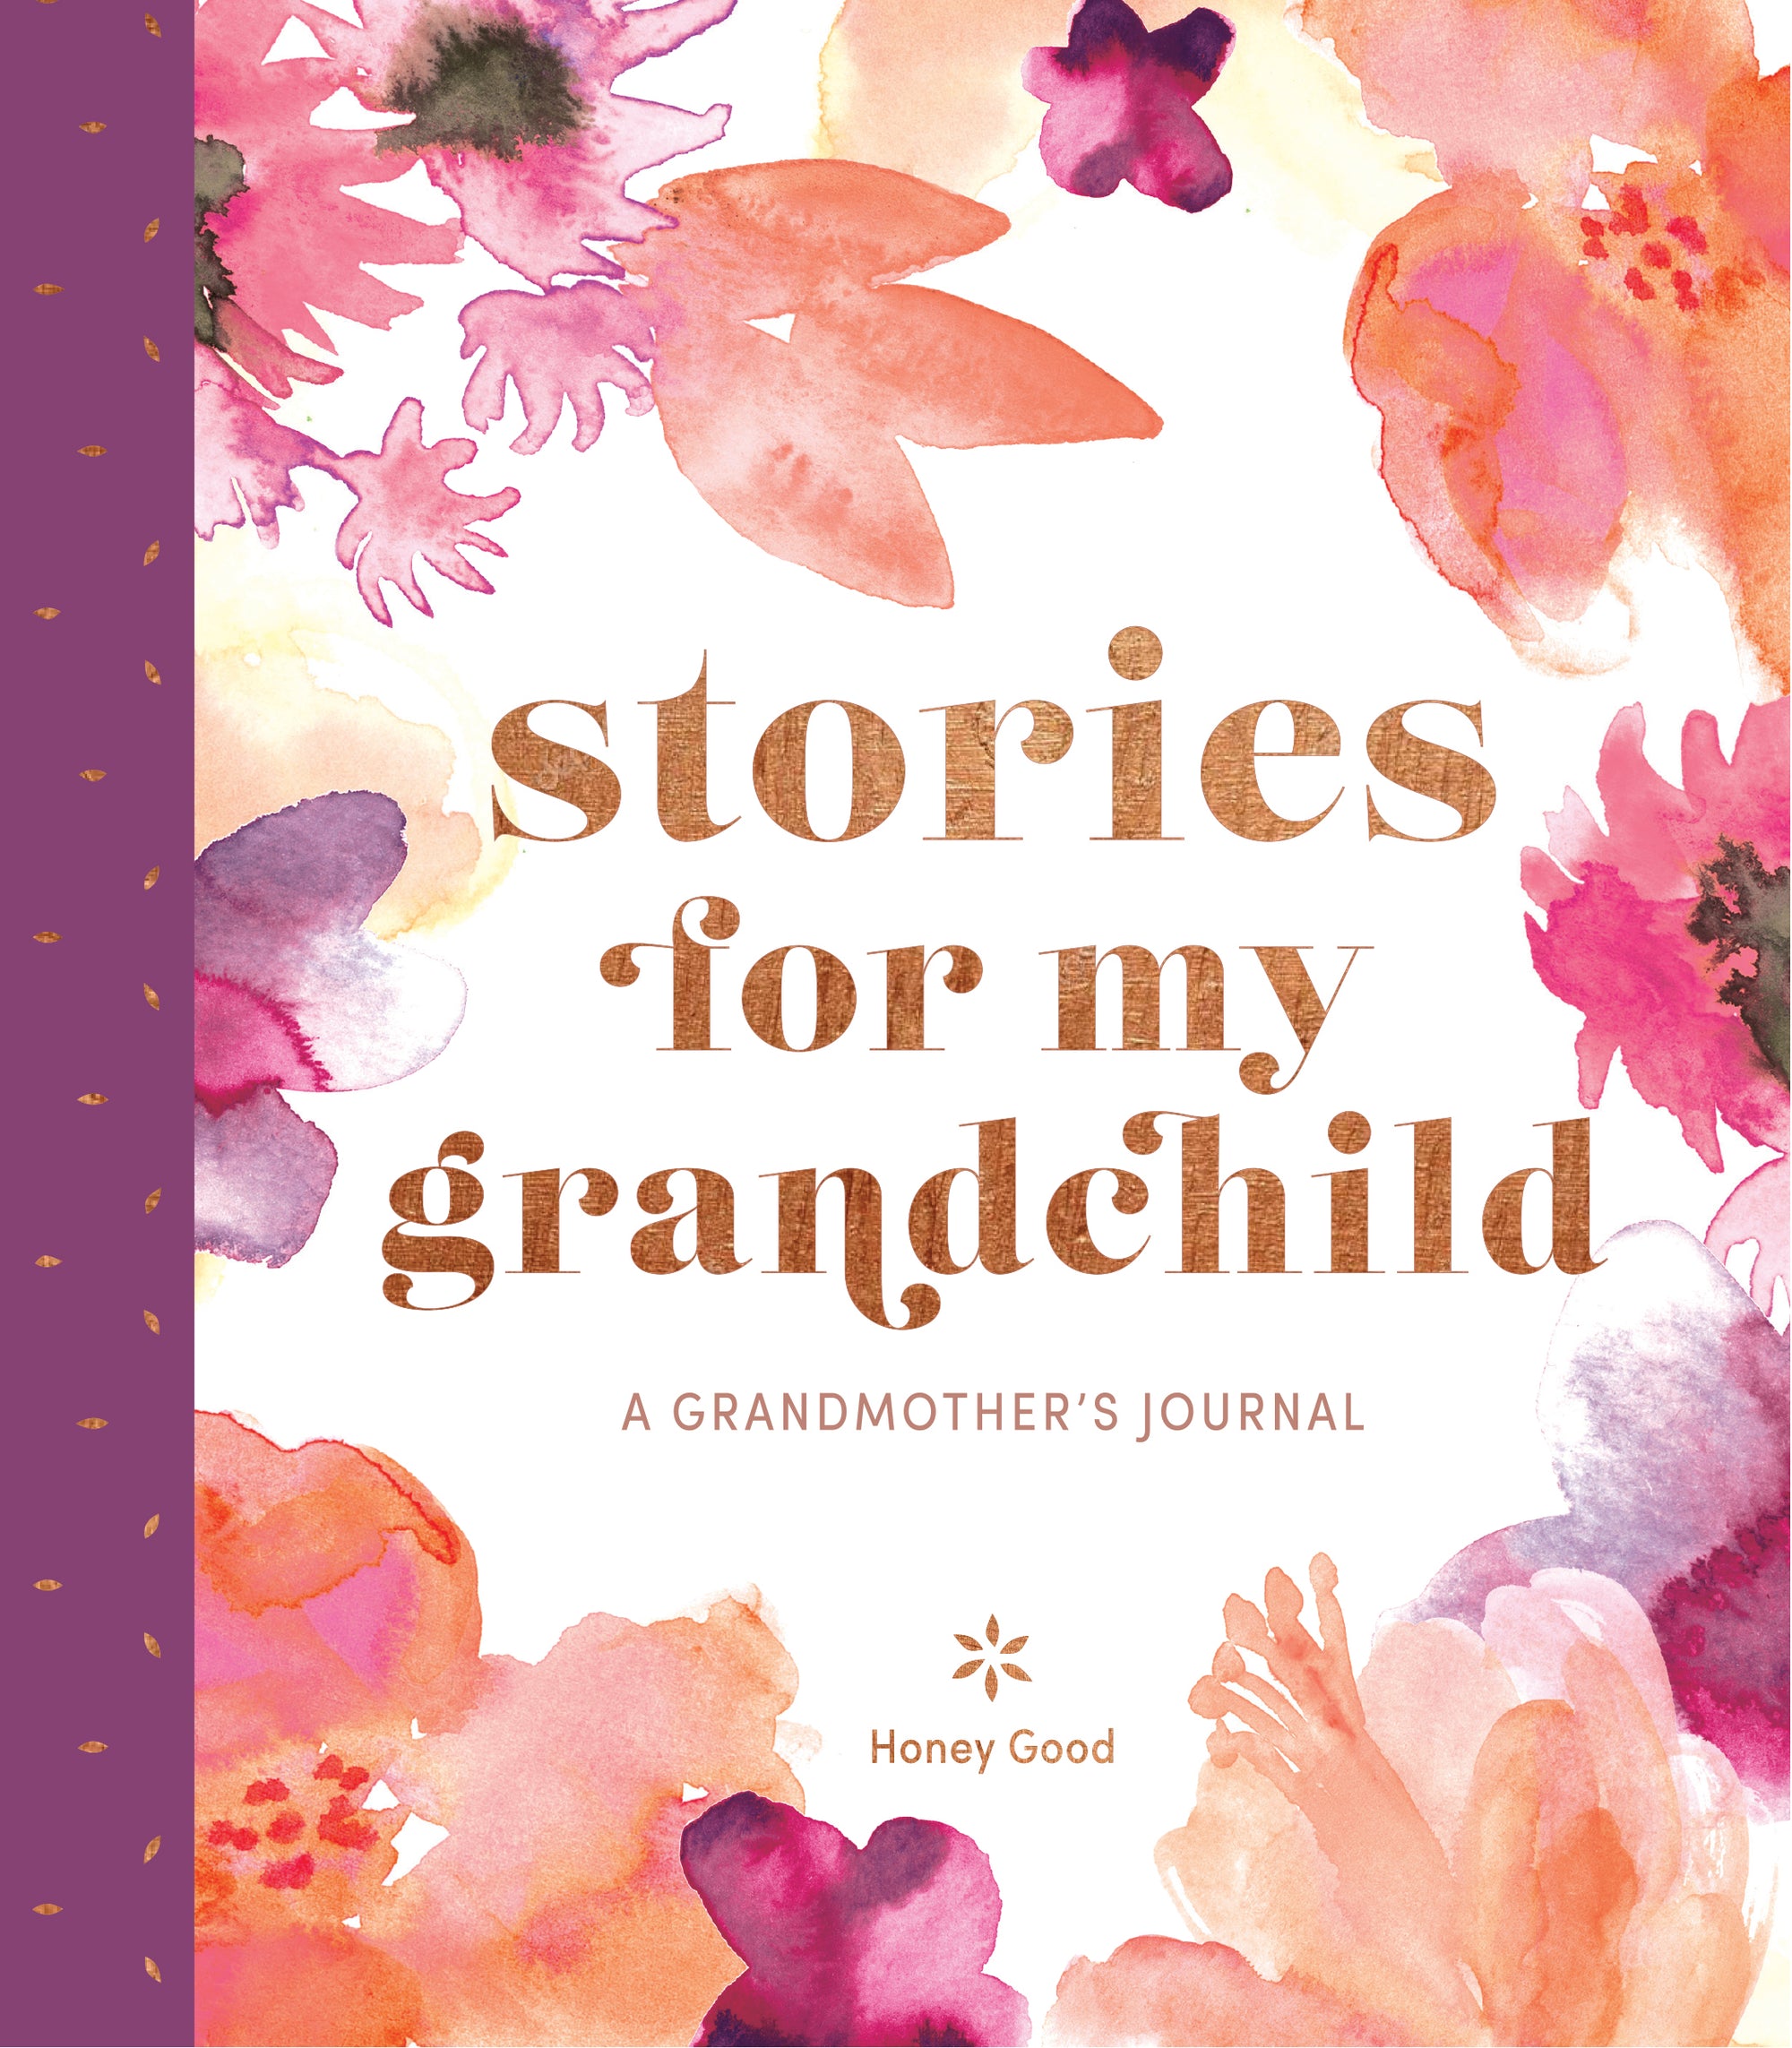 Stories for My Grandchild